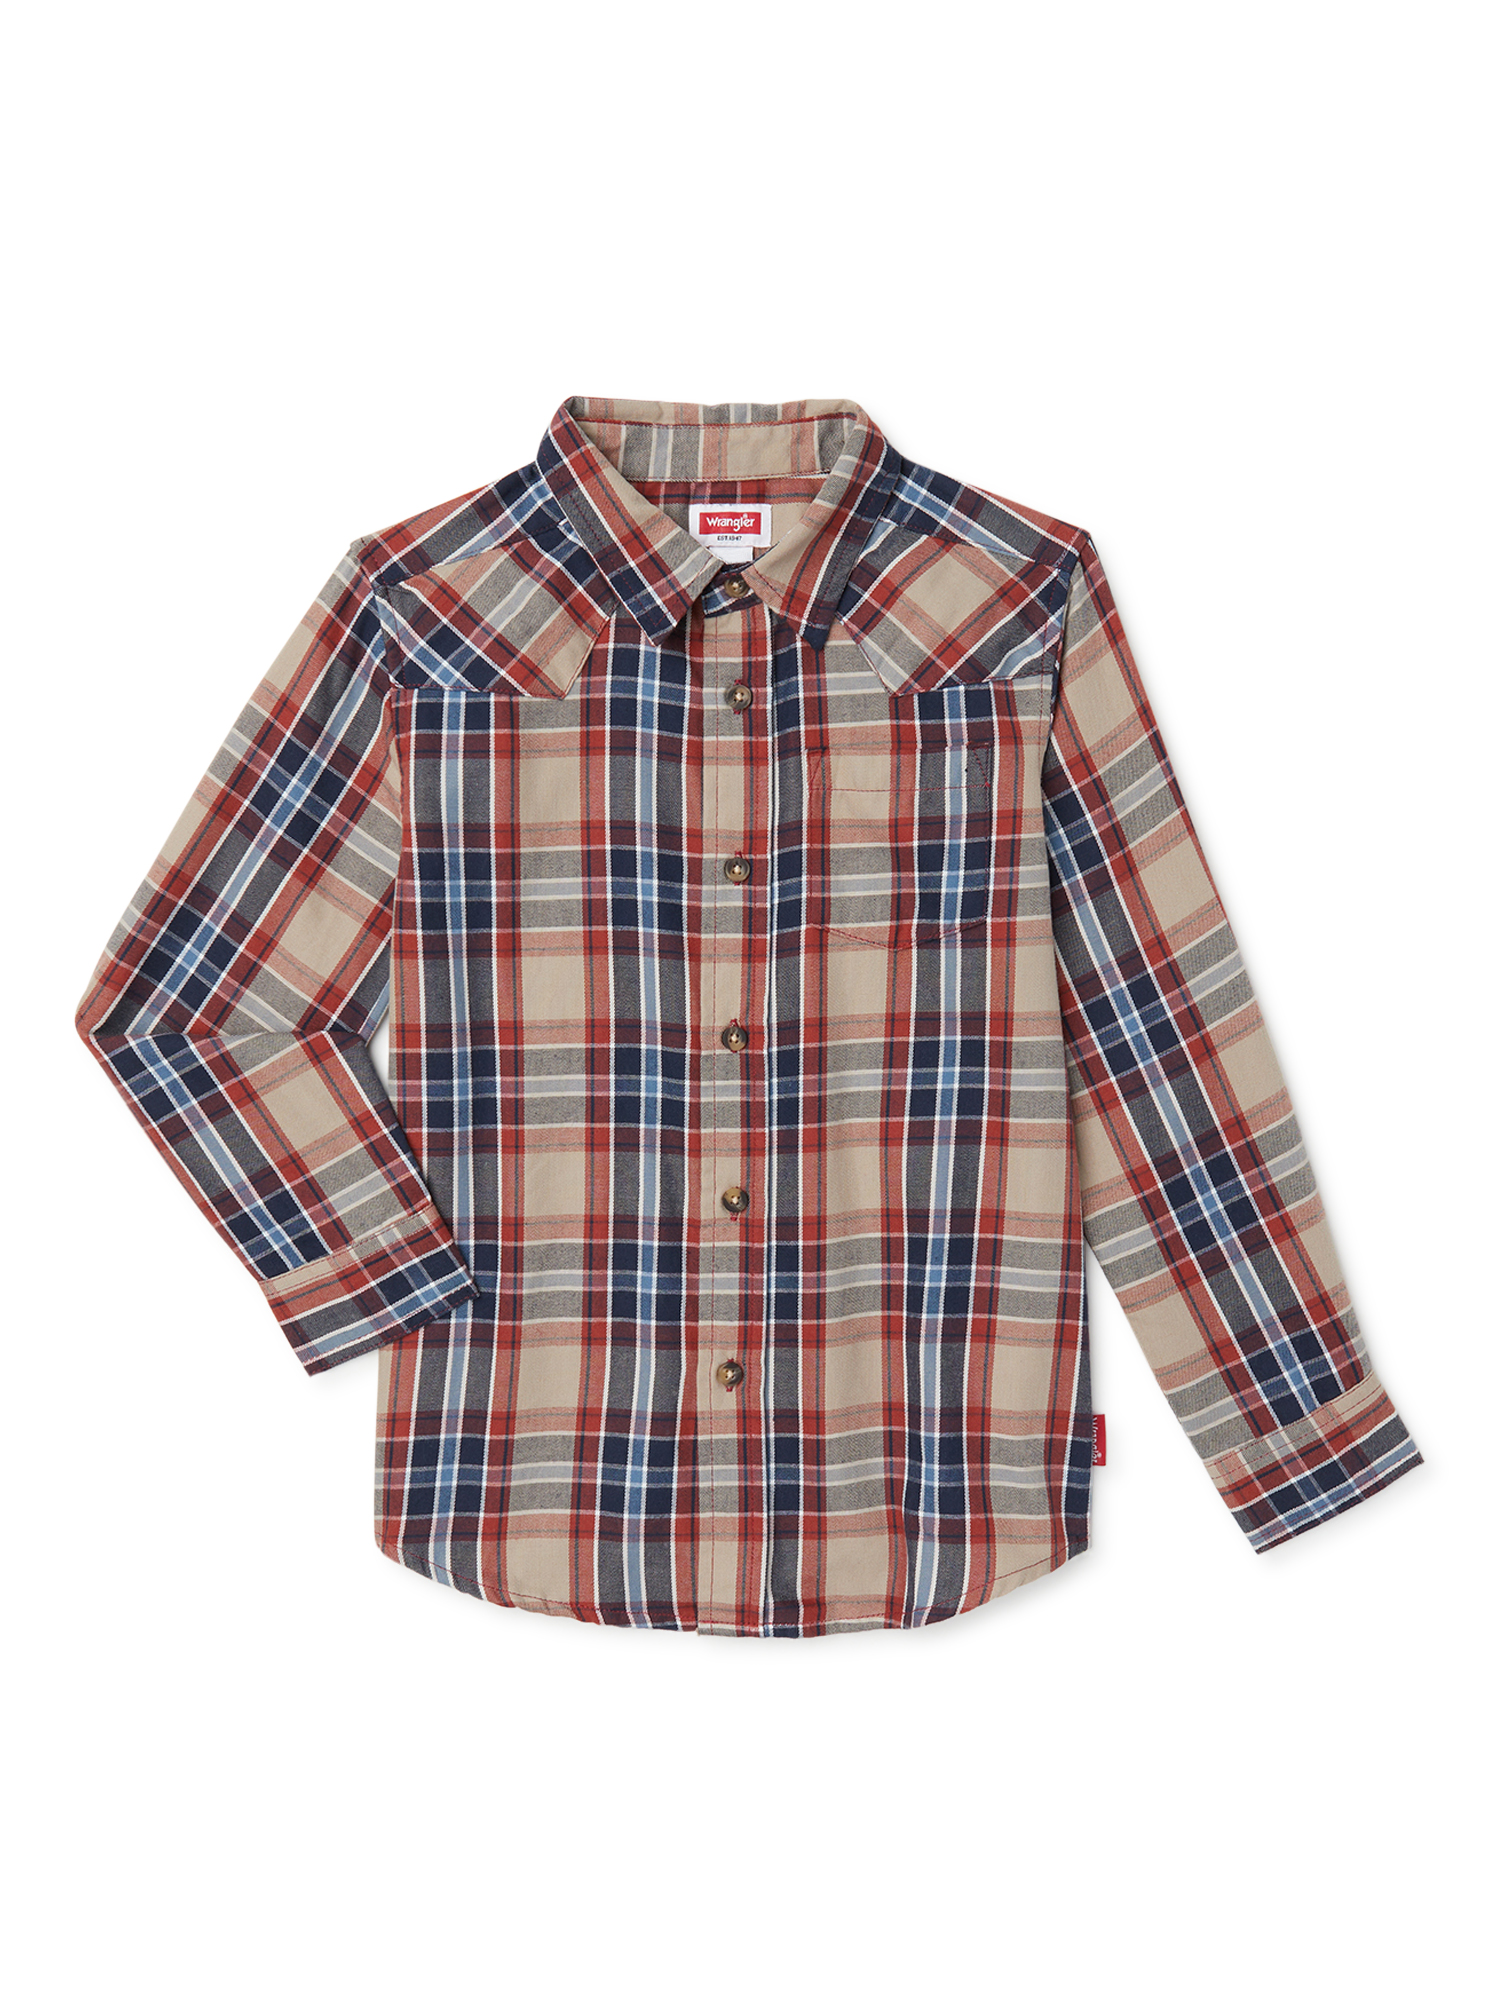 Wrangler Boys Long Sleeve Button-Up Shirt, Sizes 4-18 & Husky - image 1 of 3